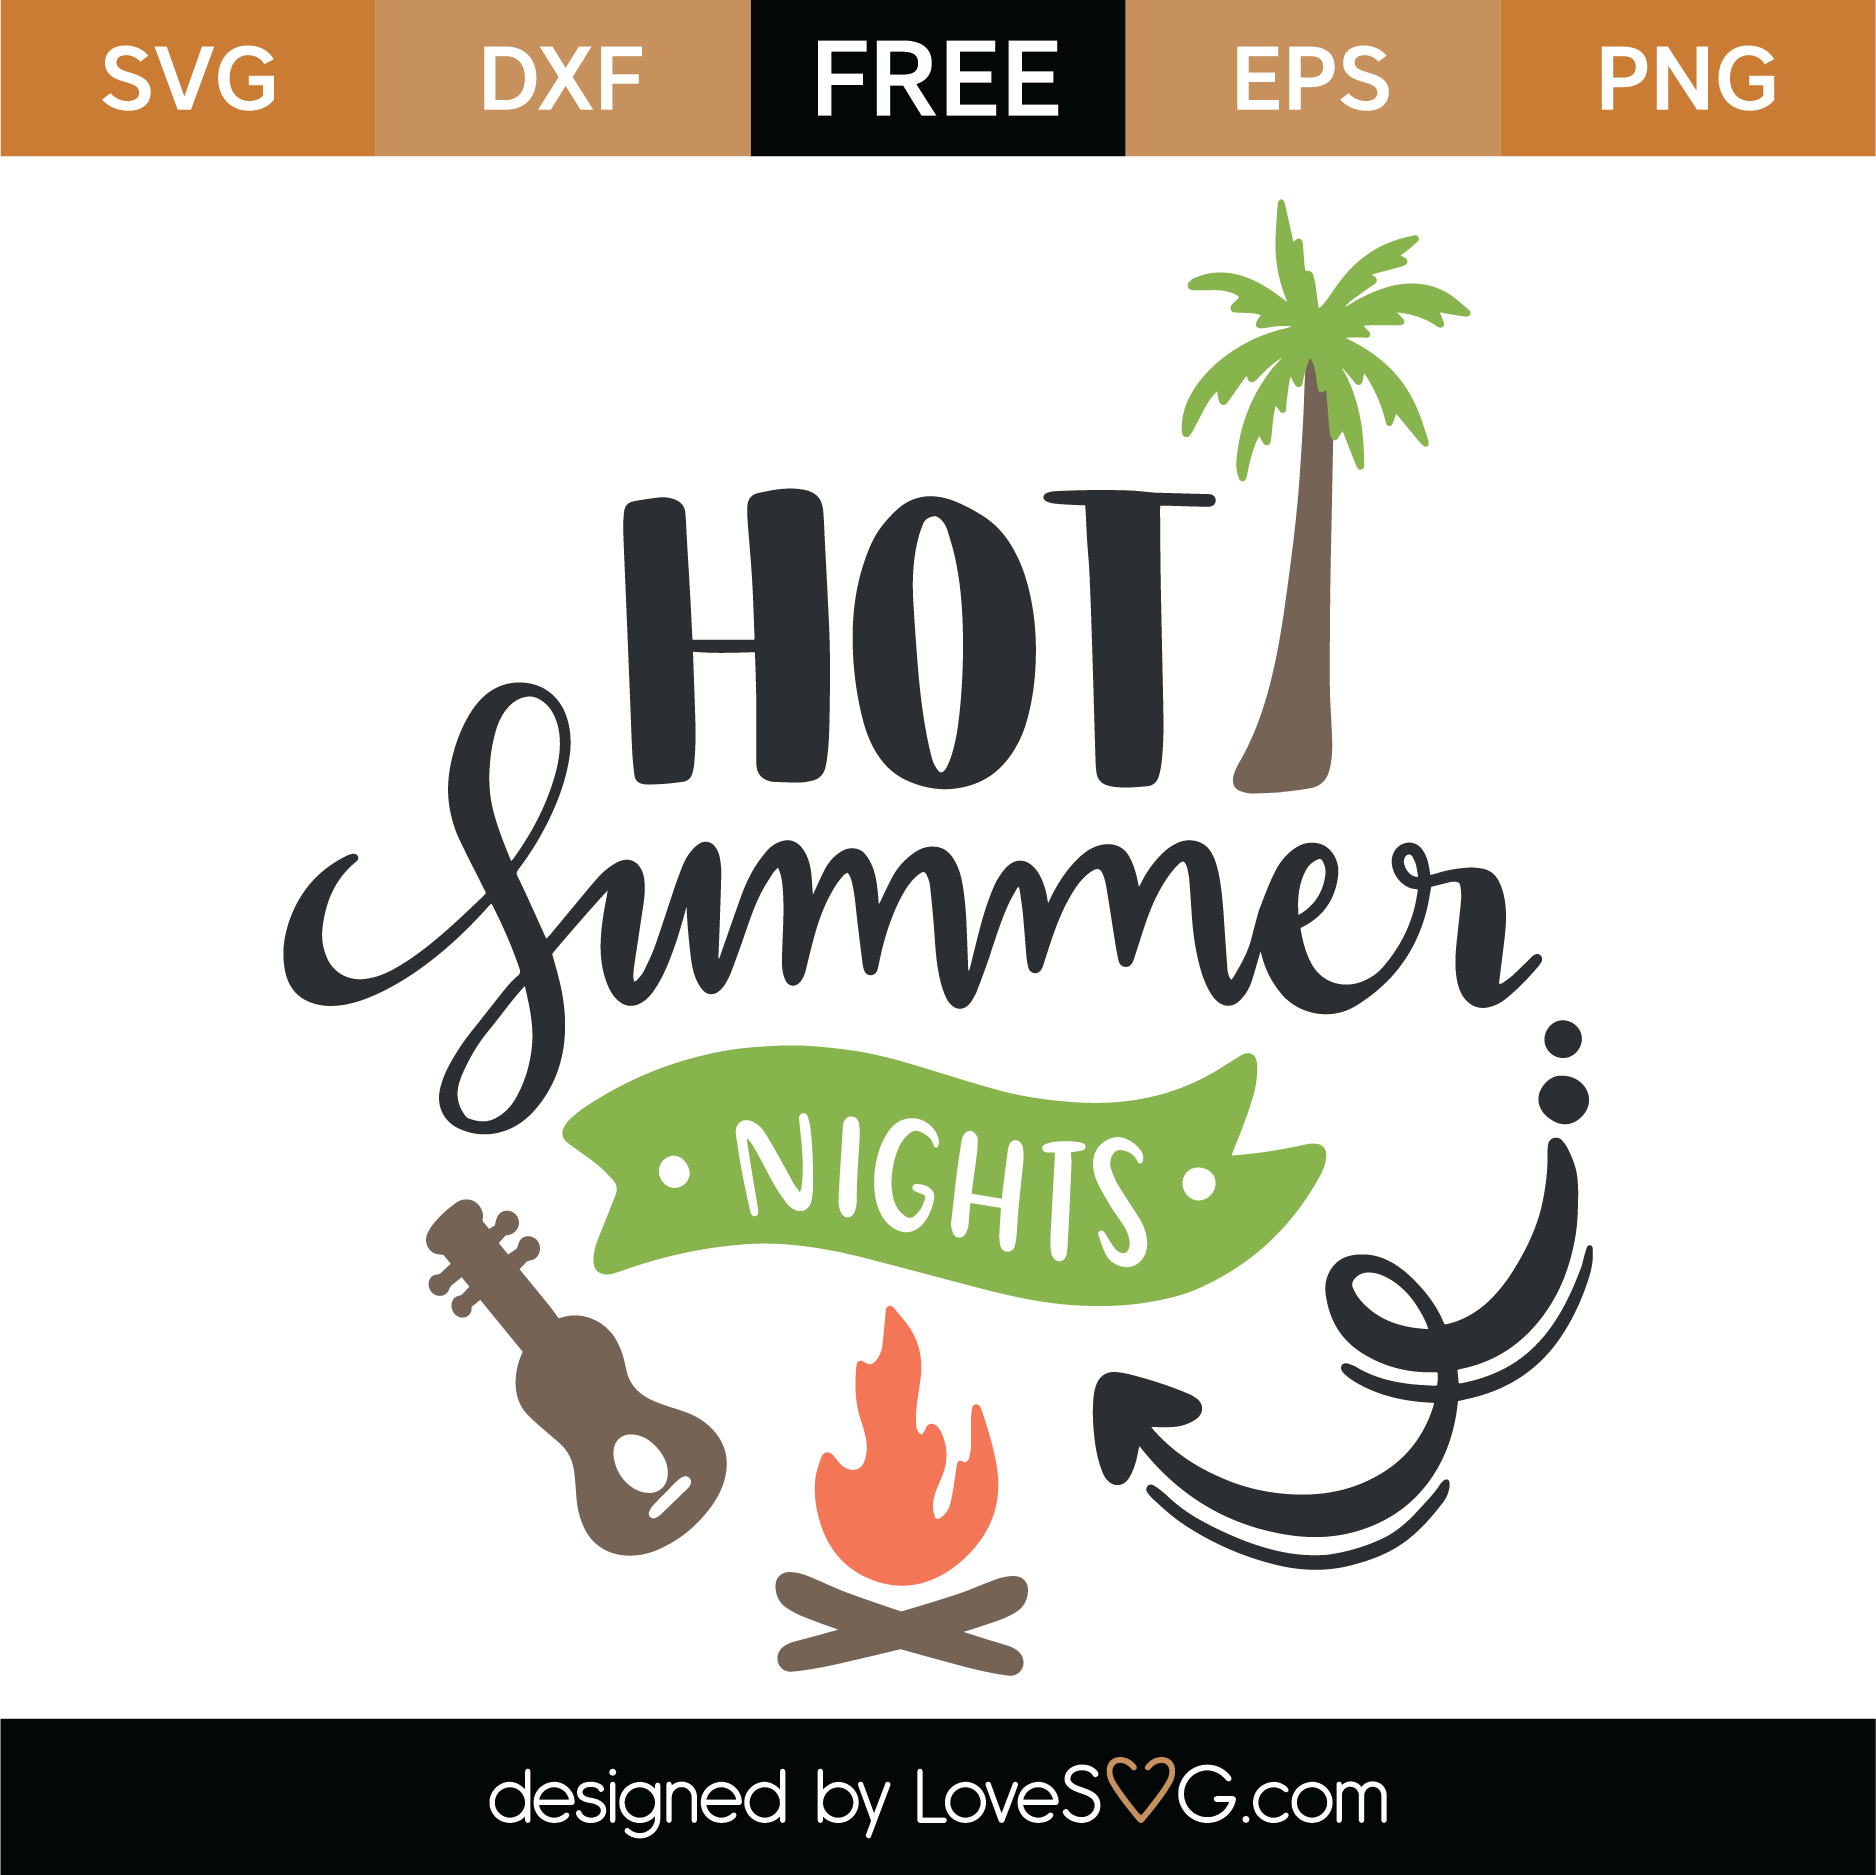 Download Free Hot Summer Nights SVG Cut File | Lovesvg.com